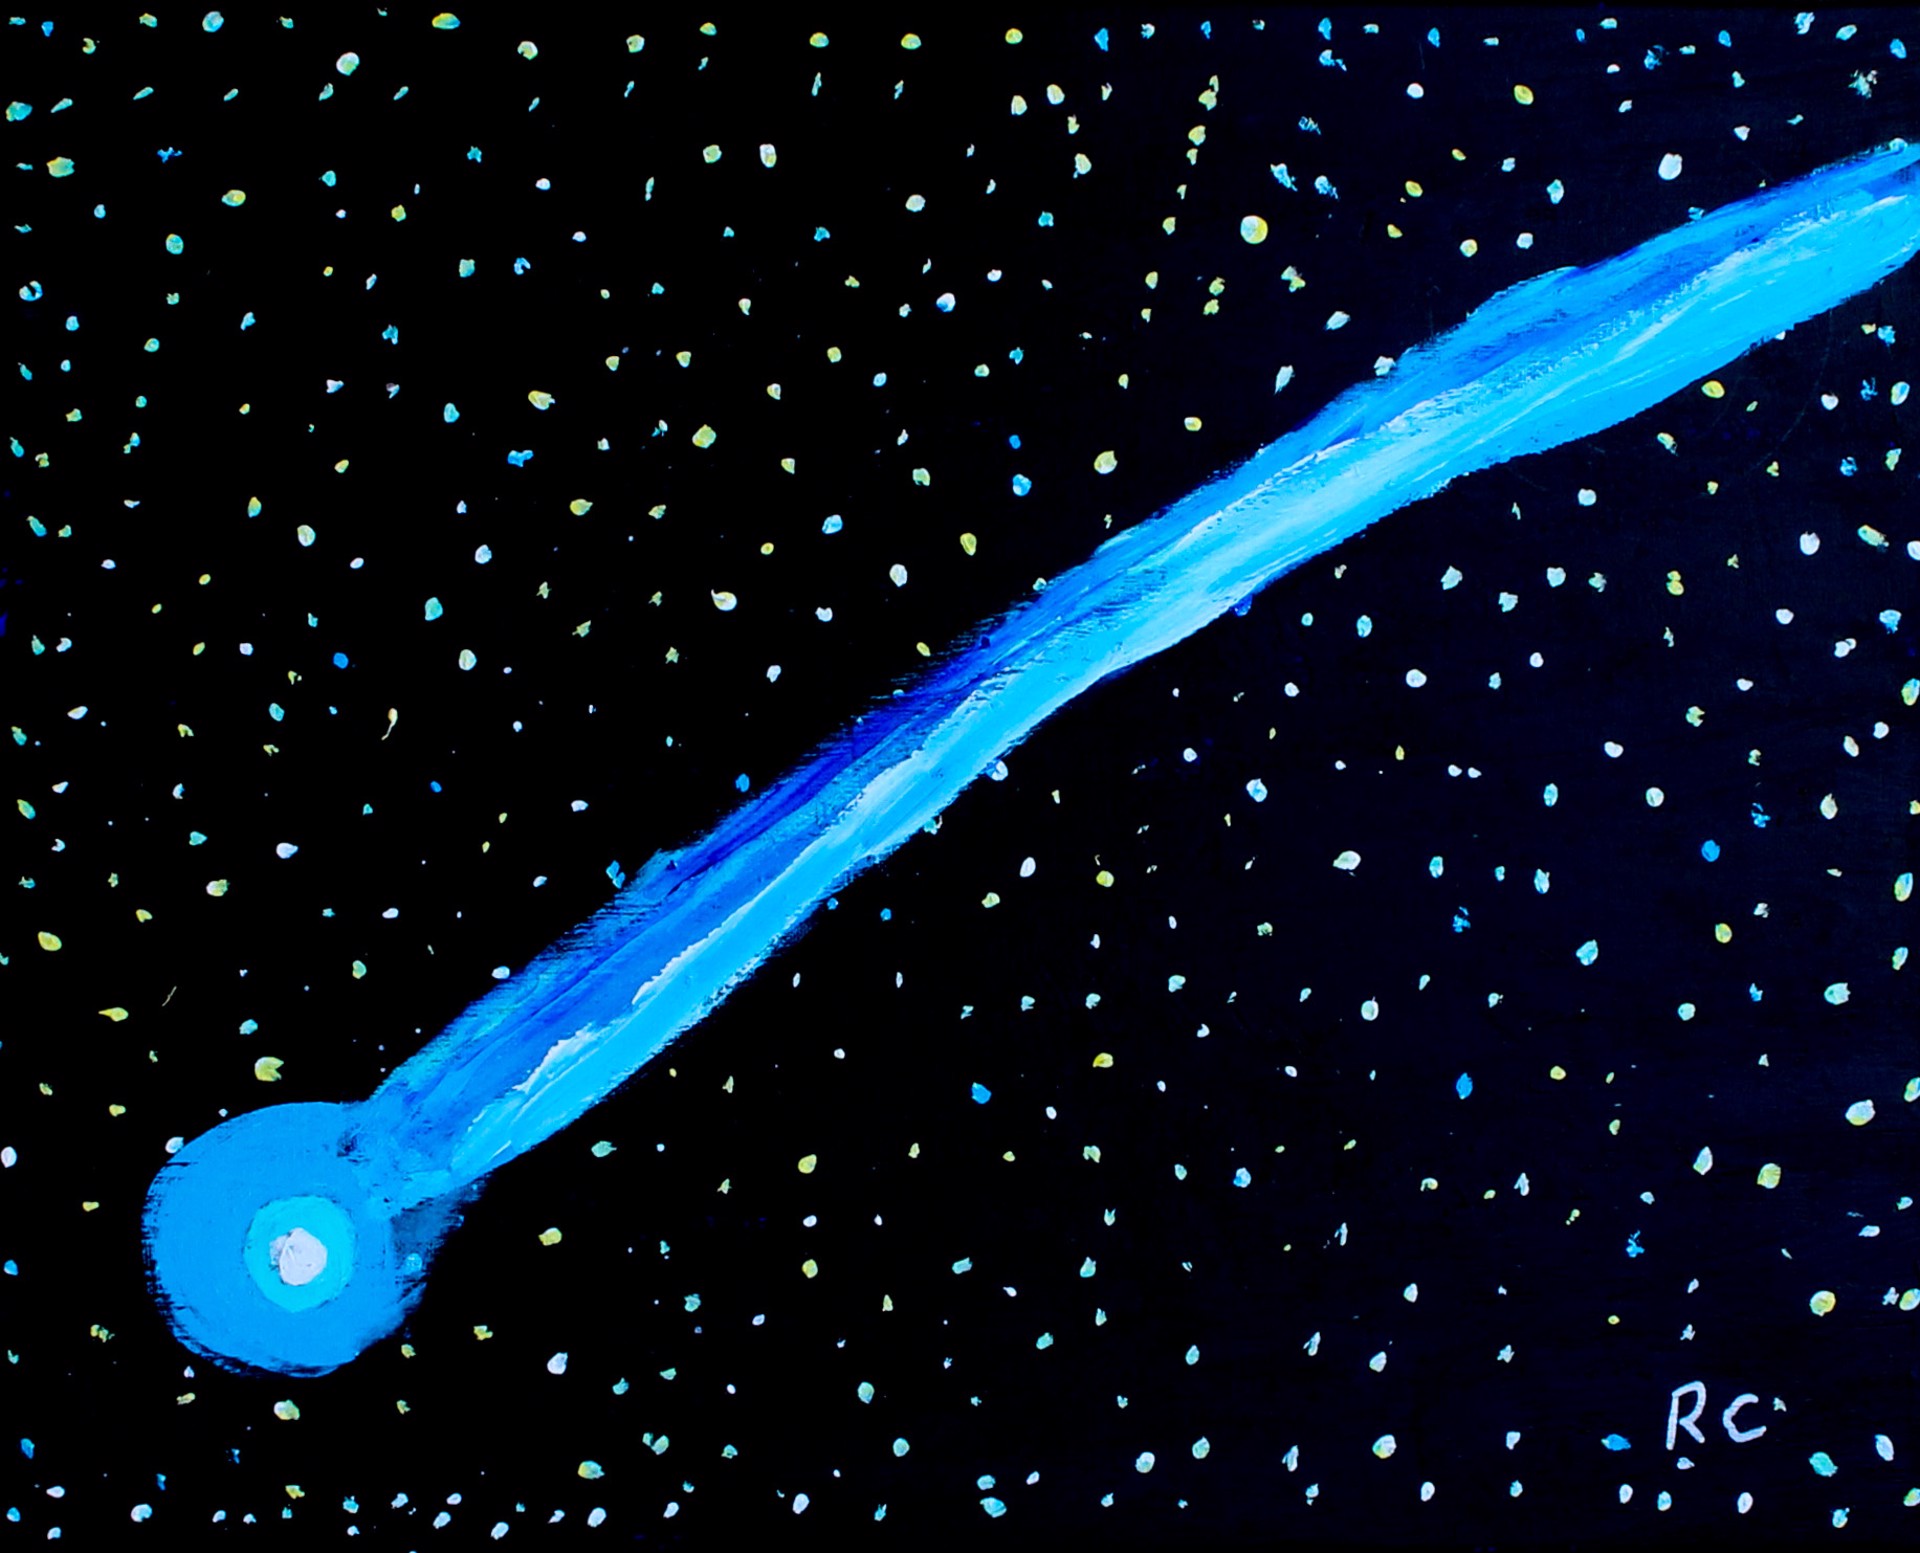 Comet Speeding Through Space  by Robert Corcoran